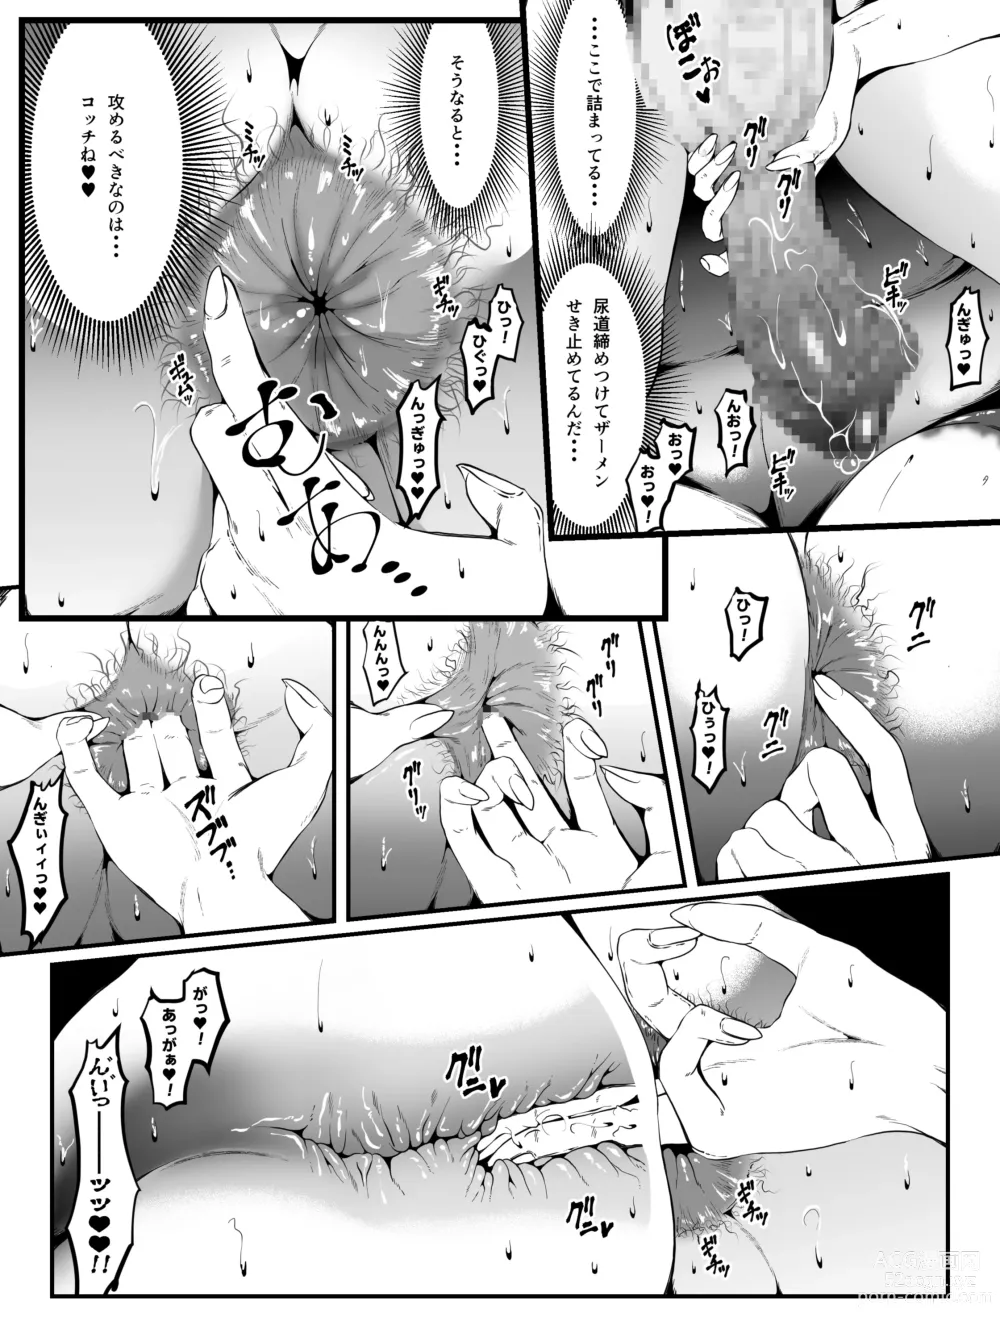 Page 28 of doujinshi Crescens-tou no Tousou Additional Stories ~Episode I~